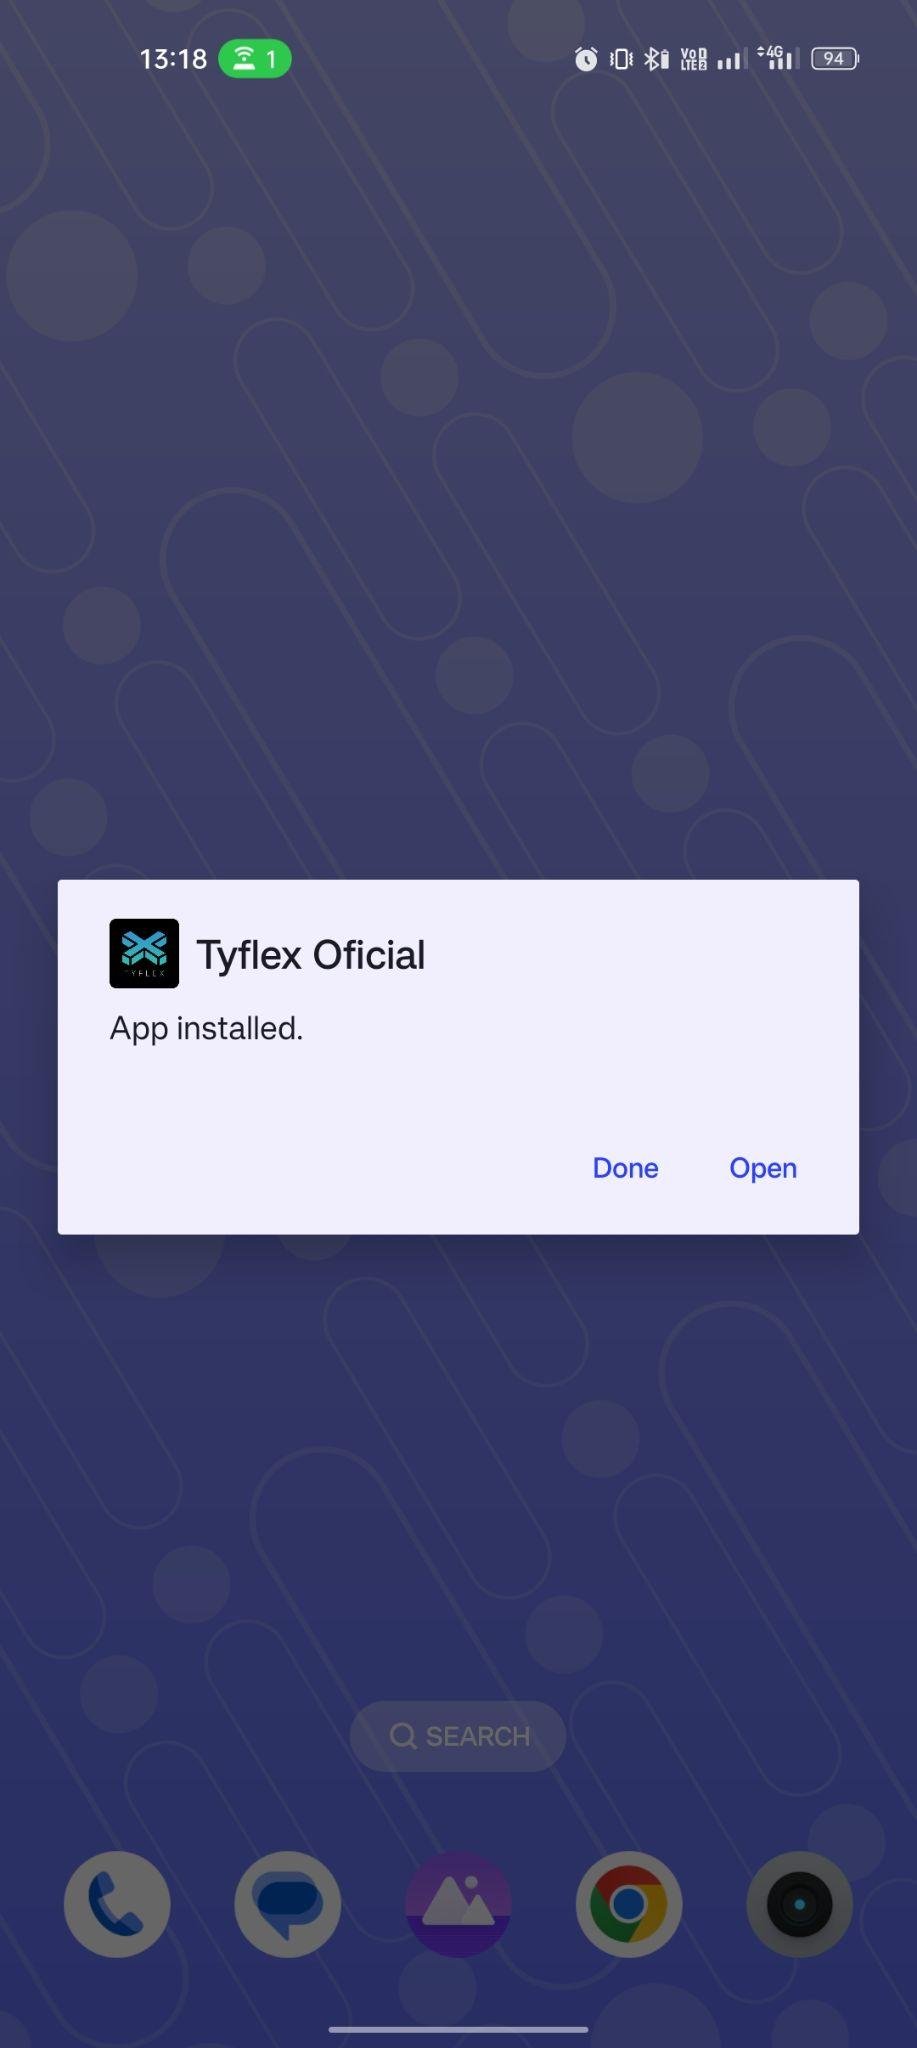 Tyflex apk installed